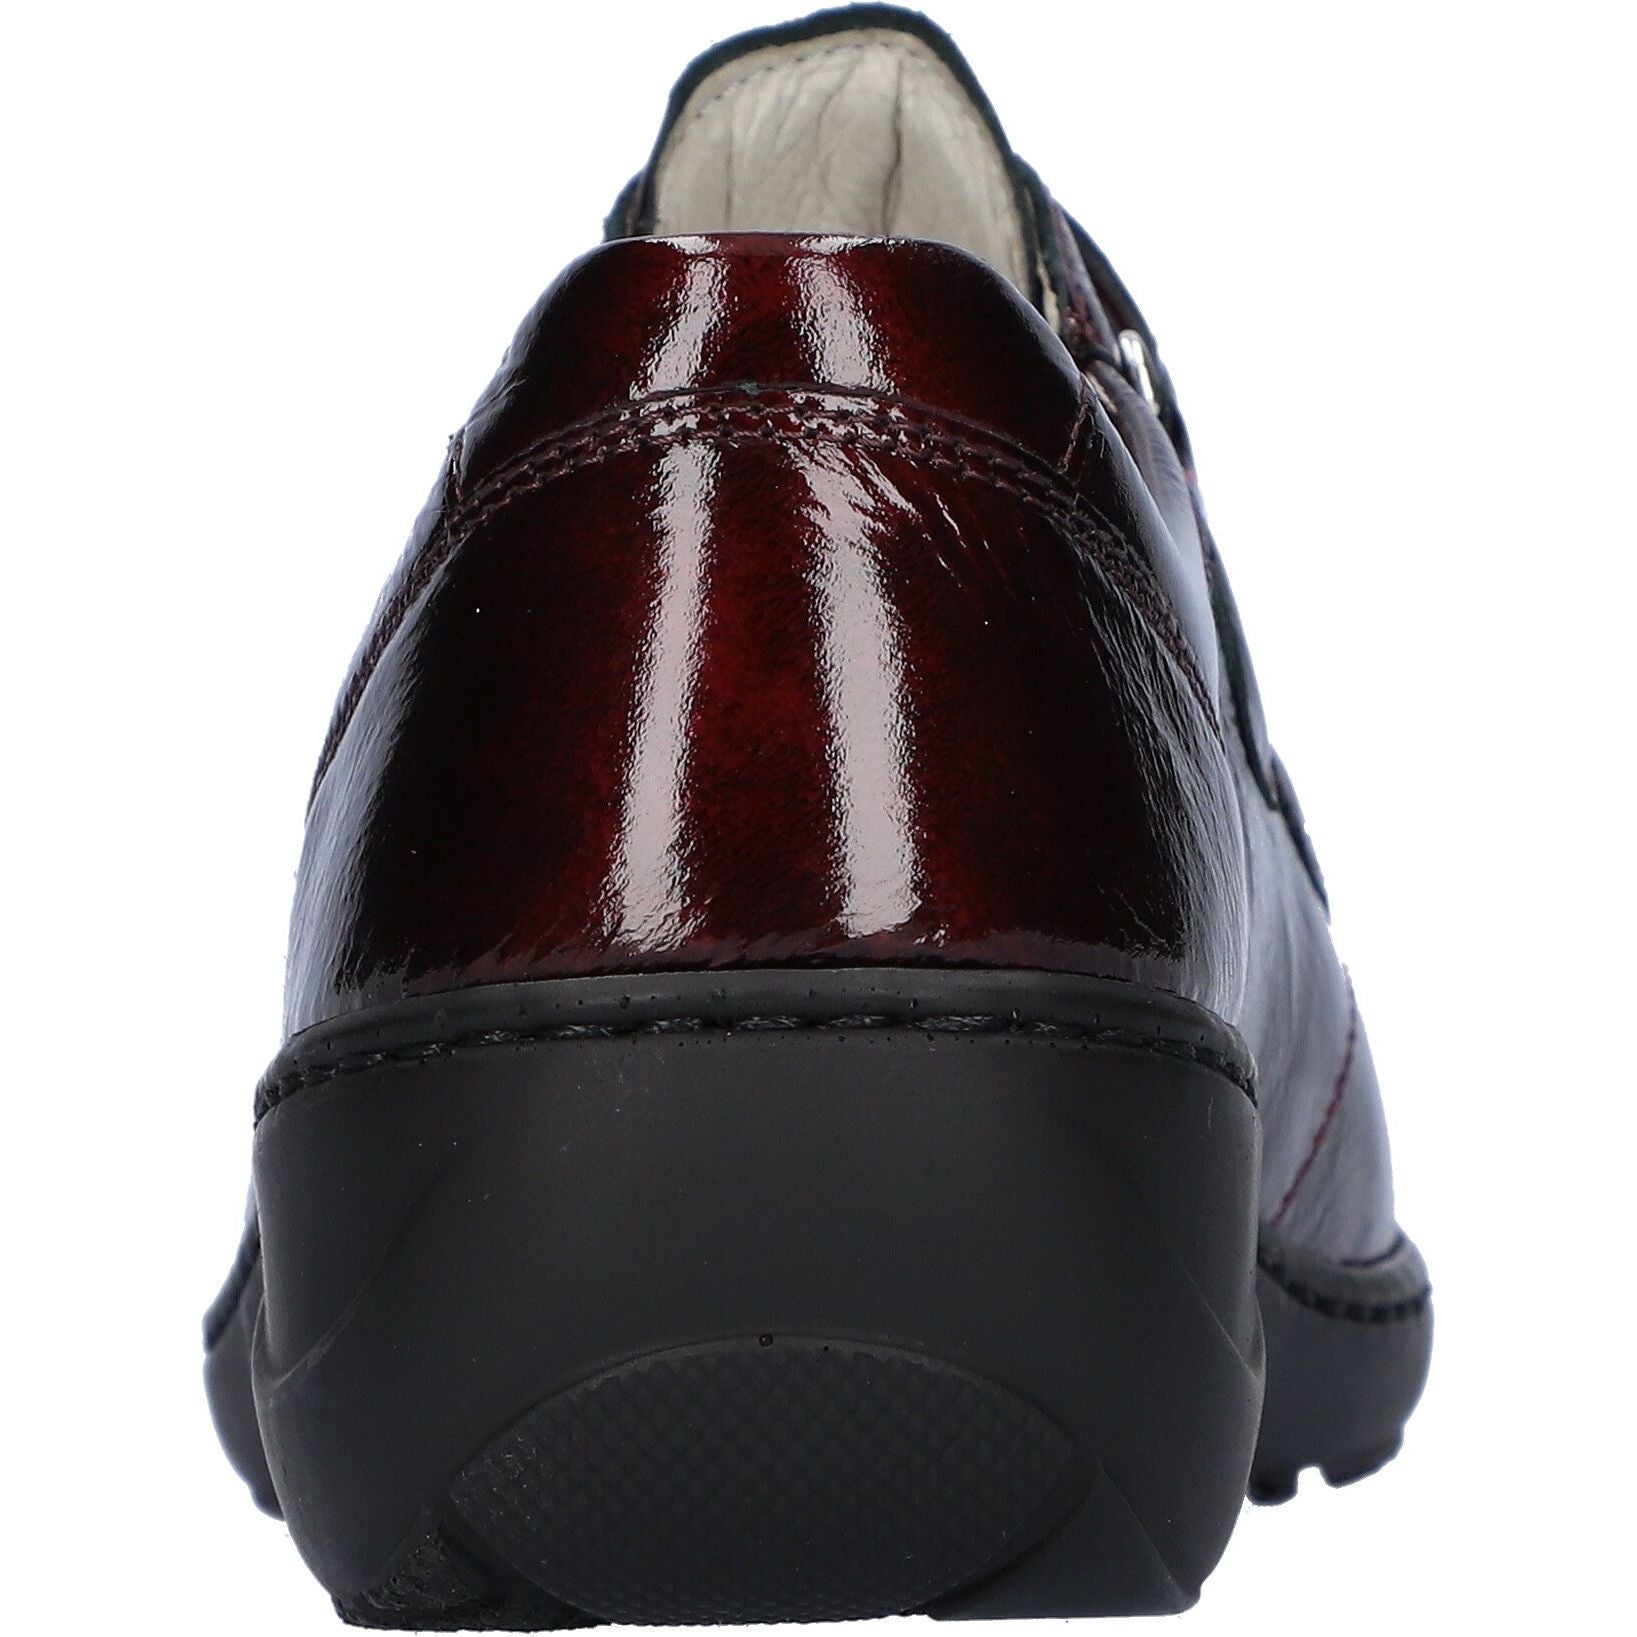 Waldlaufer Kya(607302) - Ladies Wide Fit Velcro Shoe in Burgandy Patent |Waldläufer |Wide Fit Shoes | Wisemans | Bantry |Shoe Shop| West Cork | Ireland